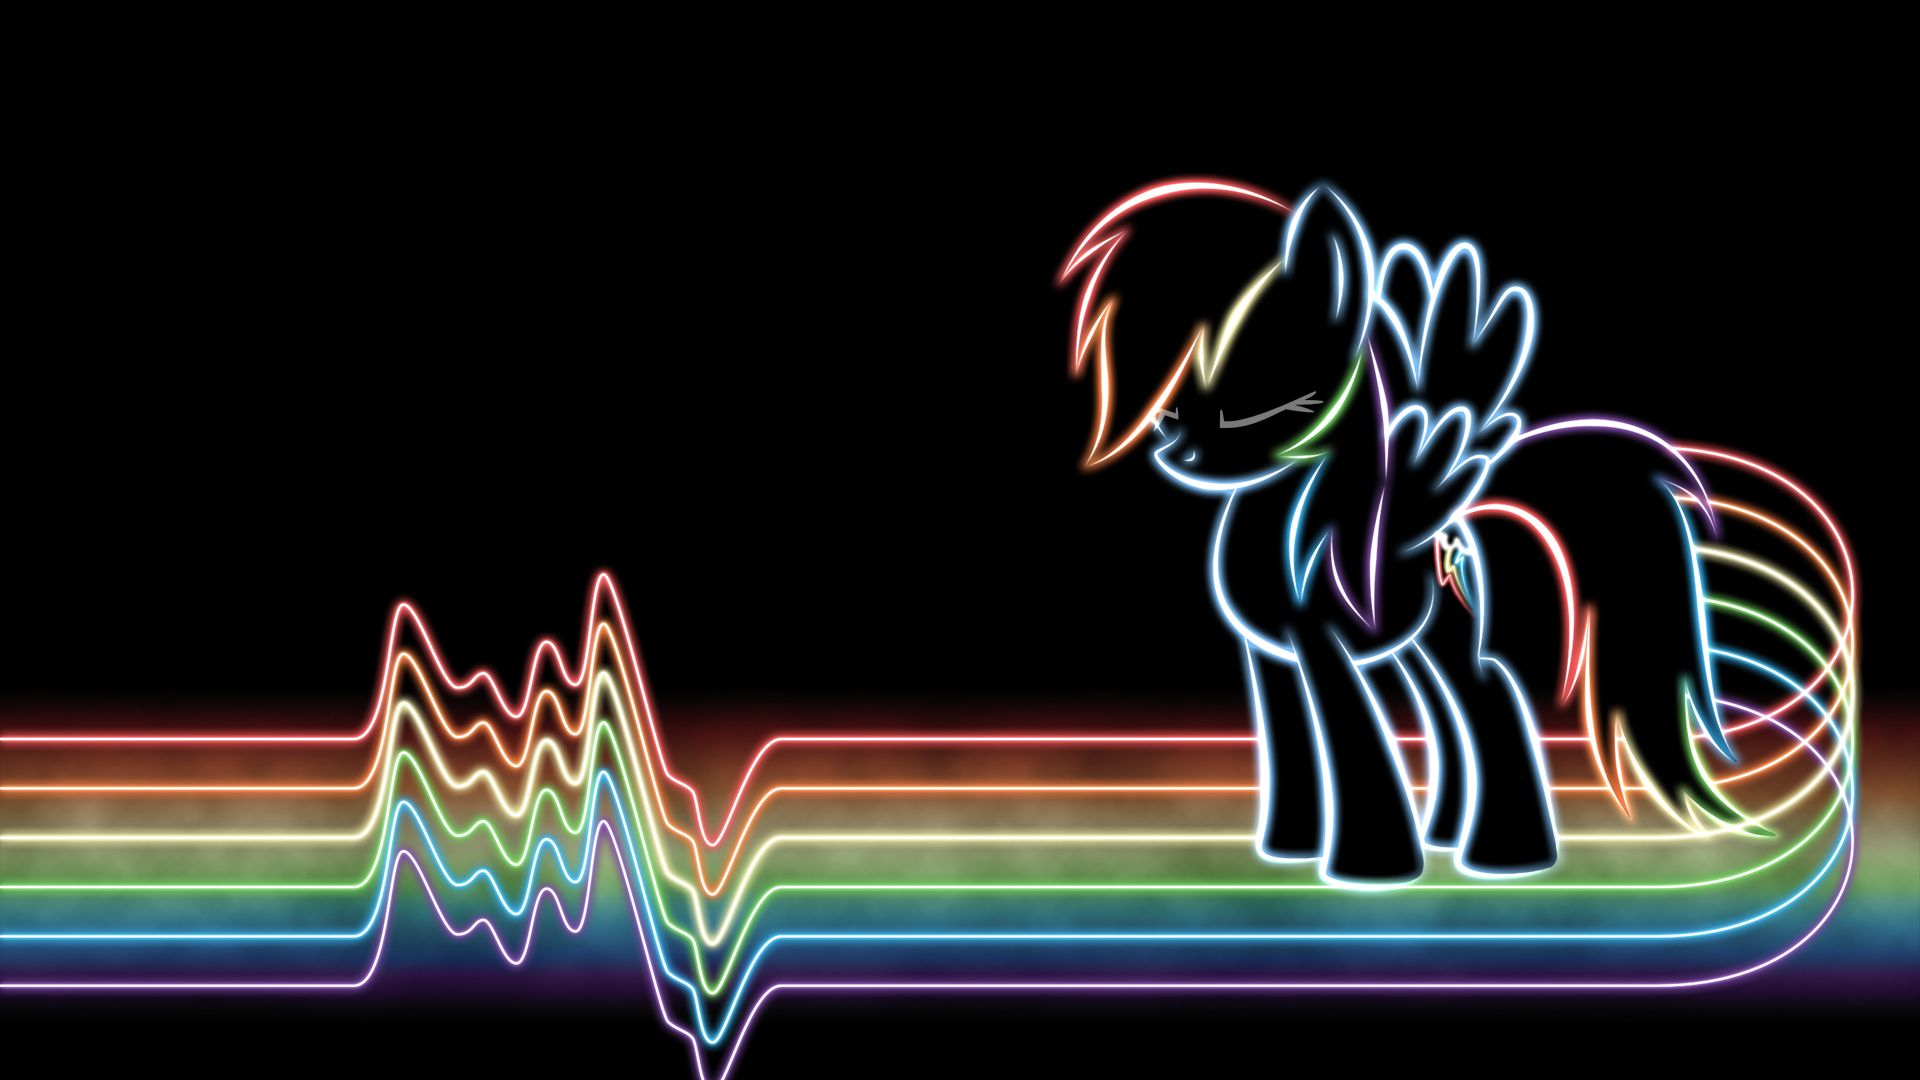 1920x1080 My Little Pony Friendship is Magic Wallpaper: MLP Glow Wallpapers | Rainbow dash, My little pony wallpaper, My little pony friendship